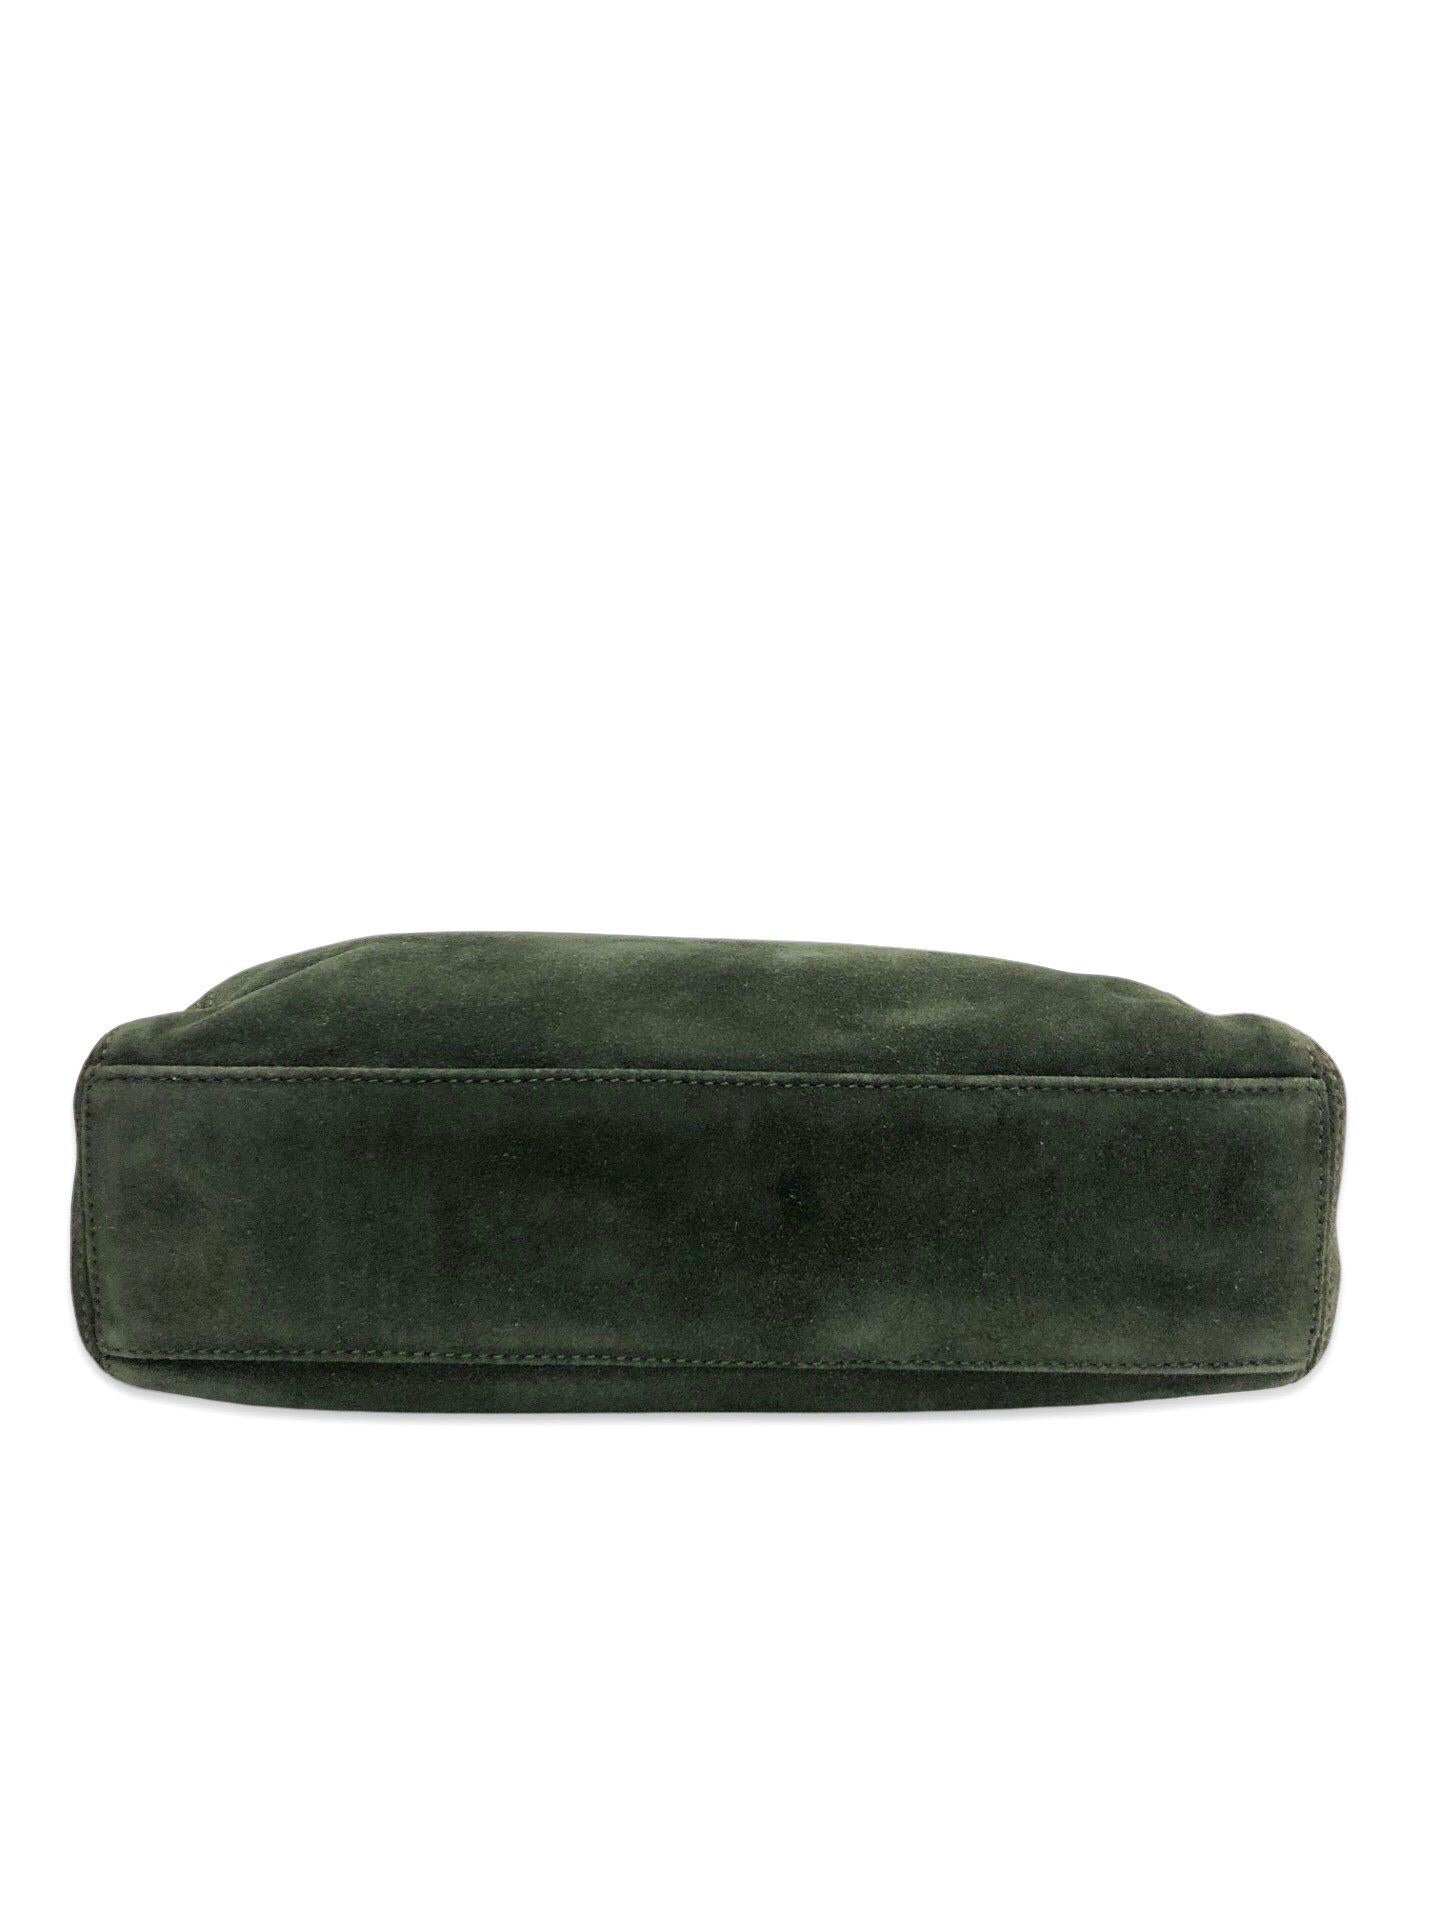 Chanel 29cm Green Suede Tortoiseshell Handle Handbag For Sale 1